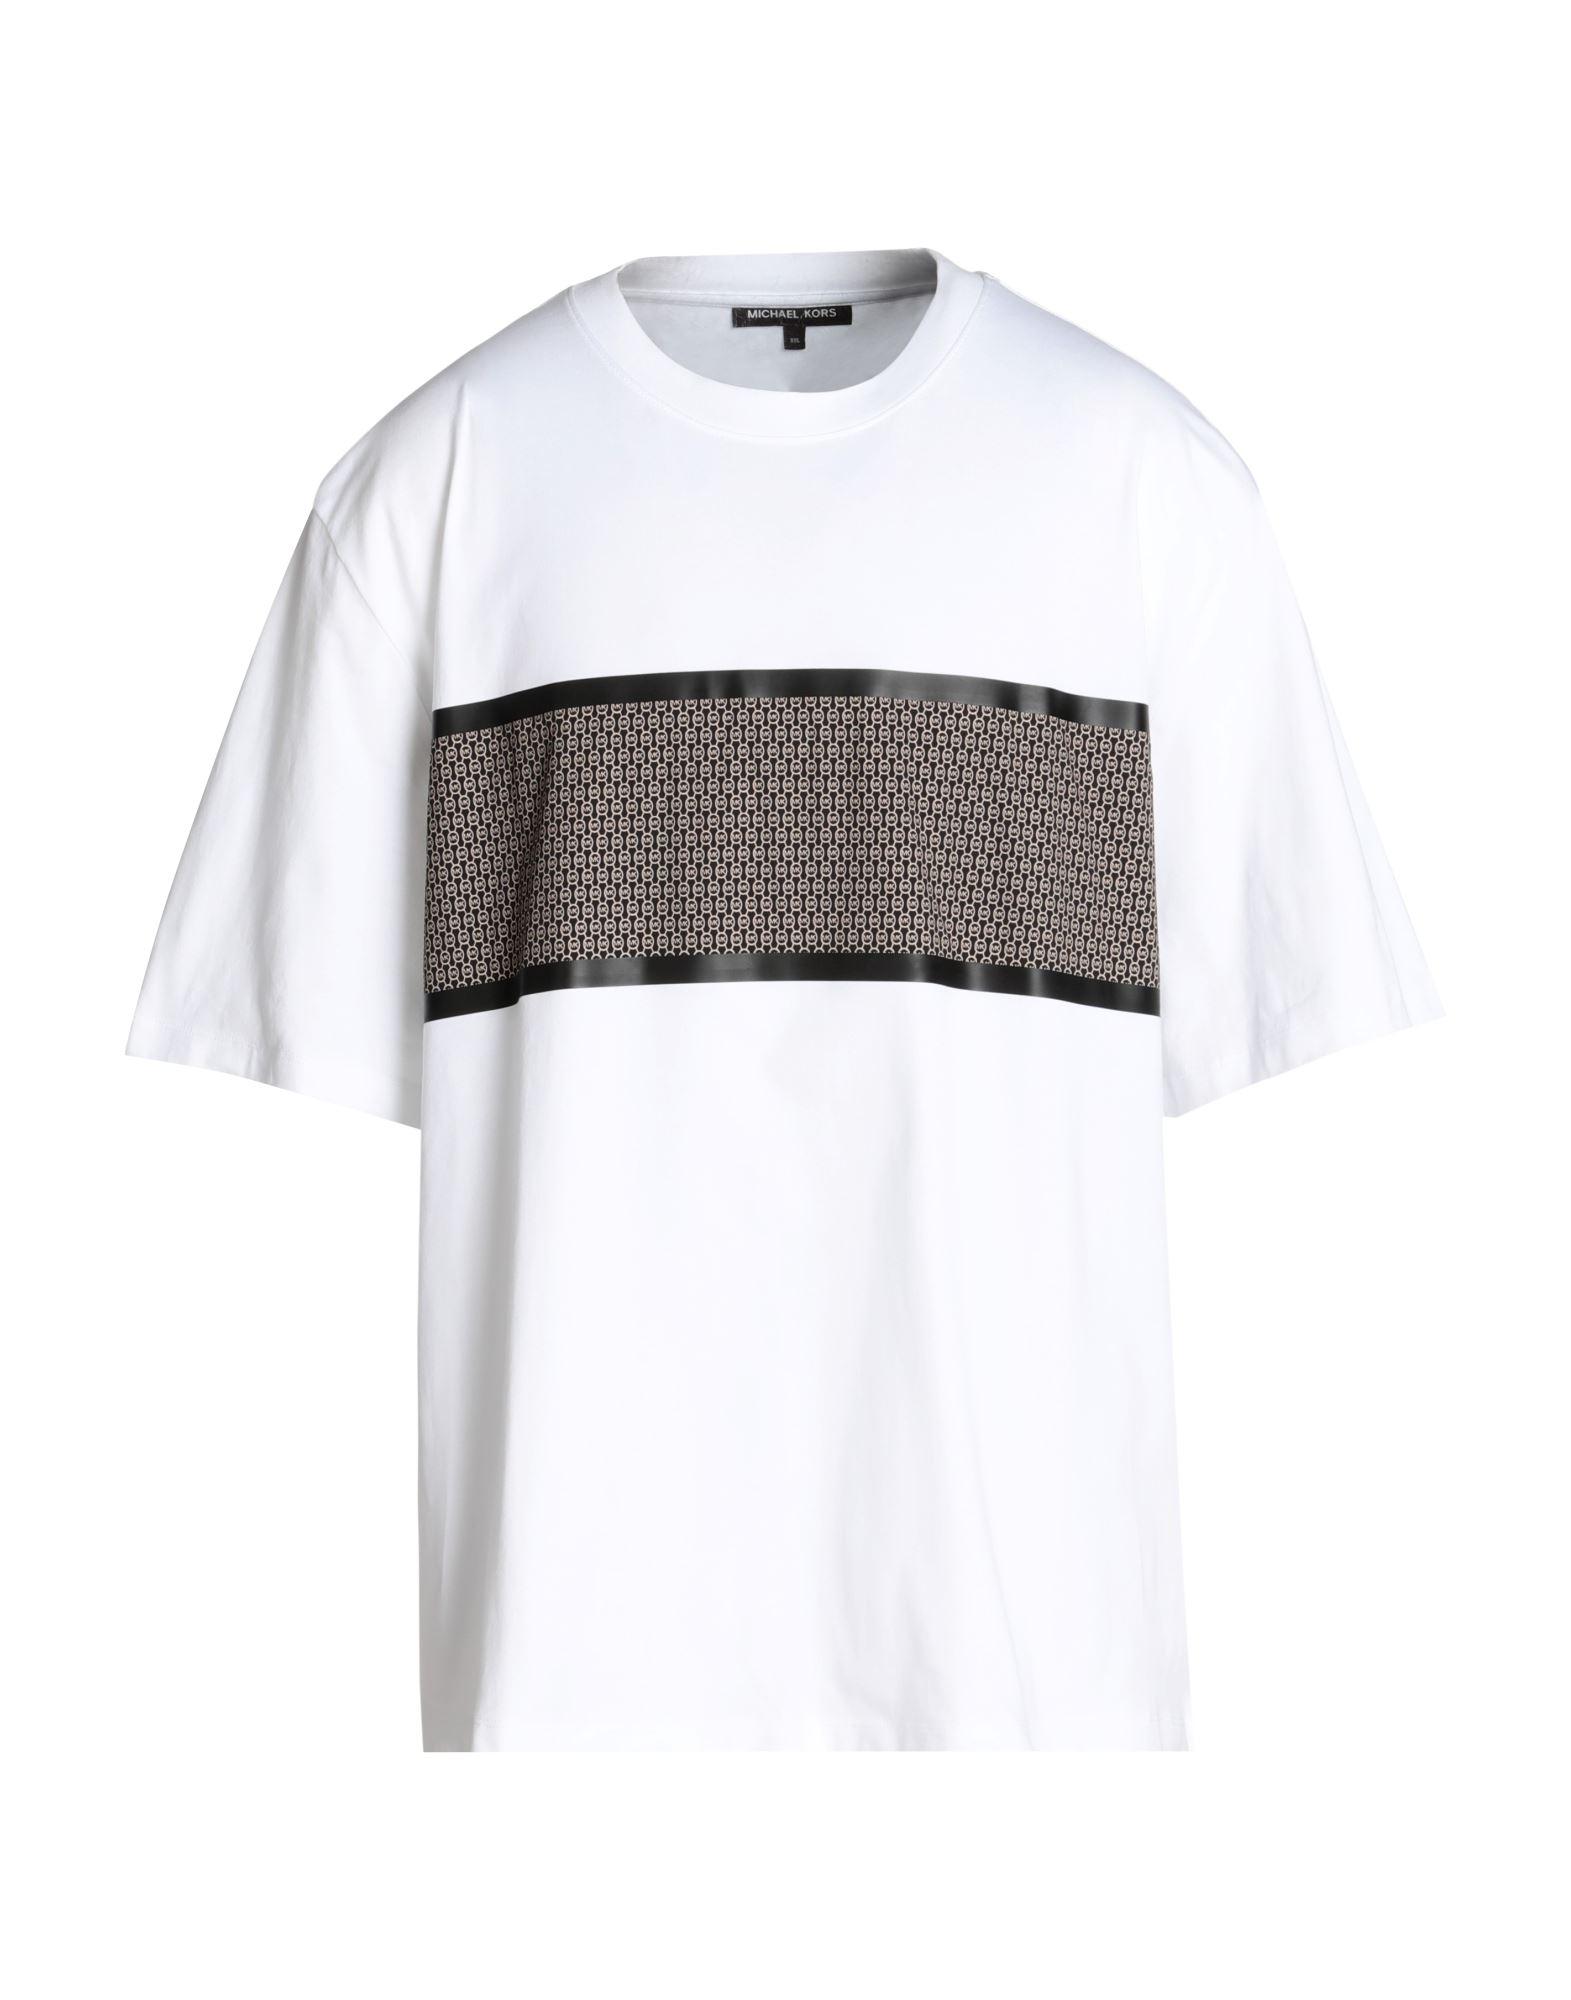 Michael Kors sunglasses-print short-sleeved Polo Shirt - Farfetch